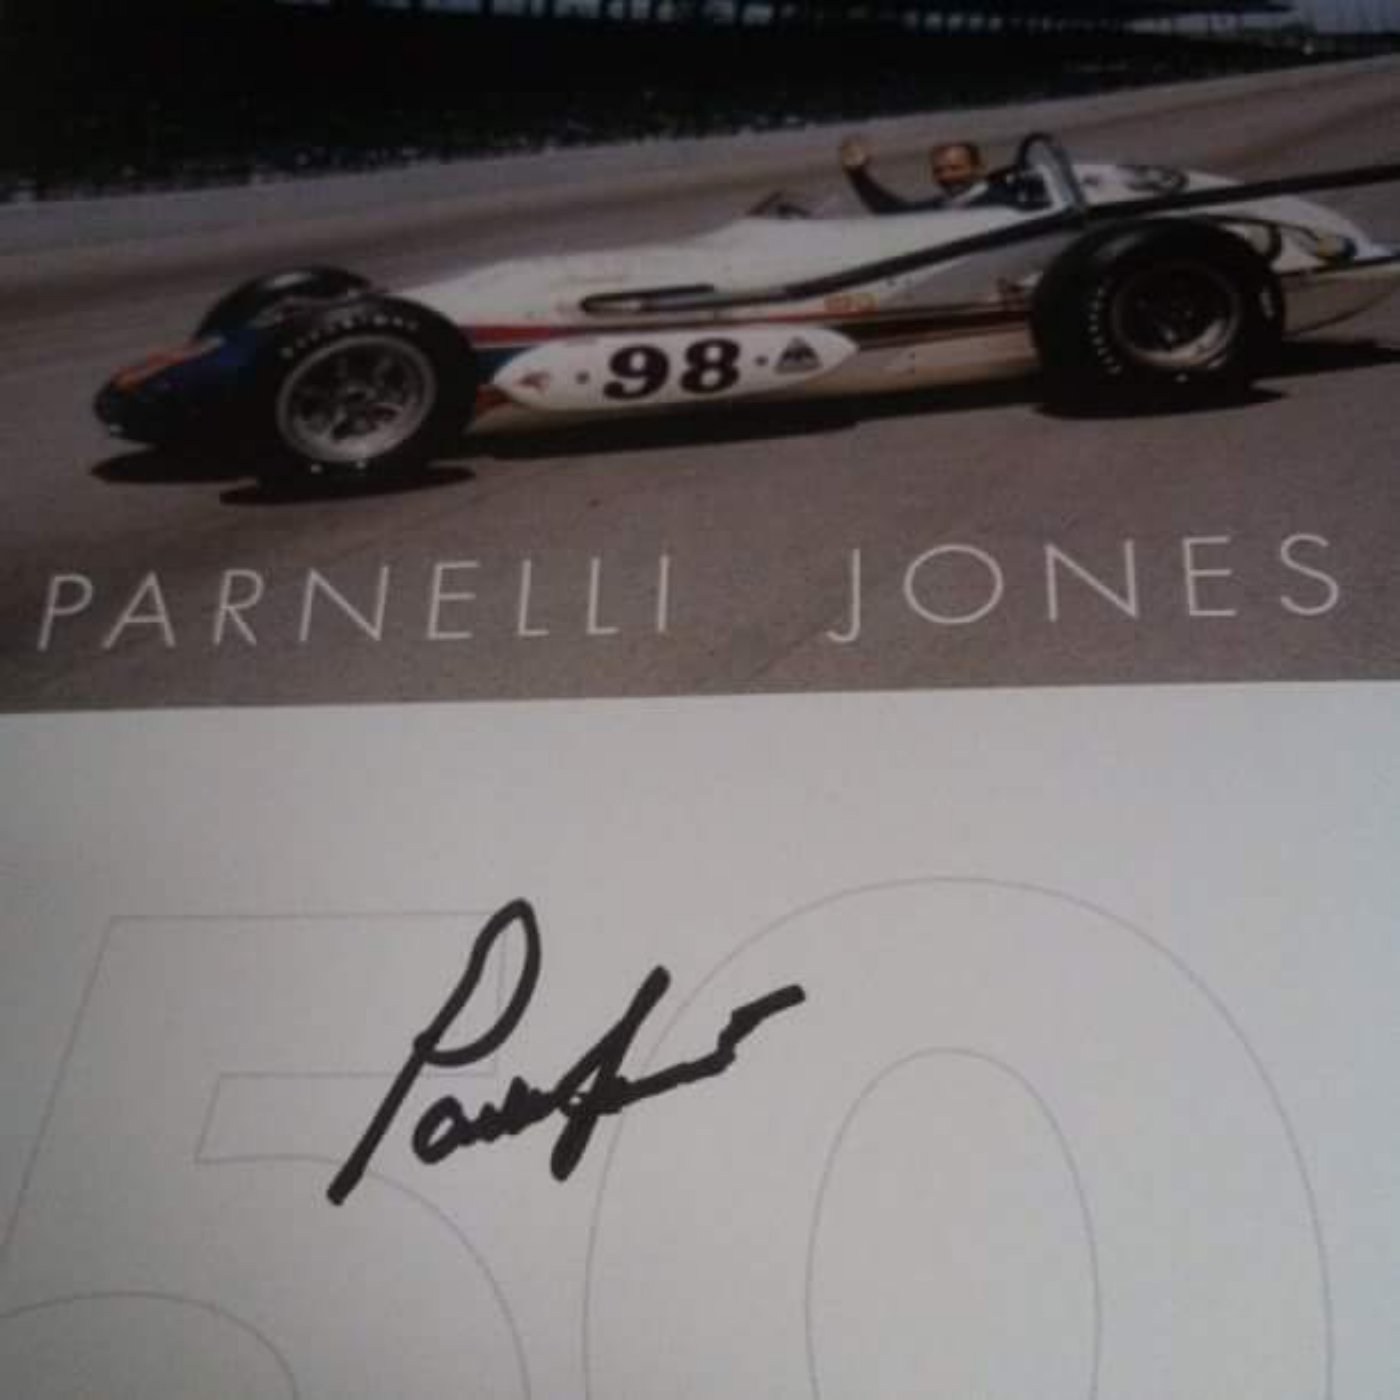 Happy birthday to the oldest living winner - Mr. Parnelli Jones. 